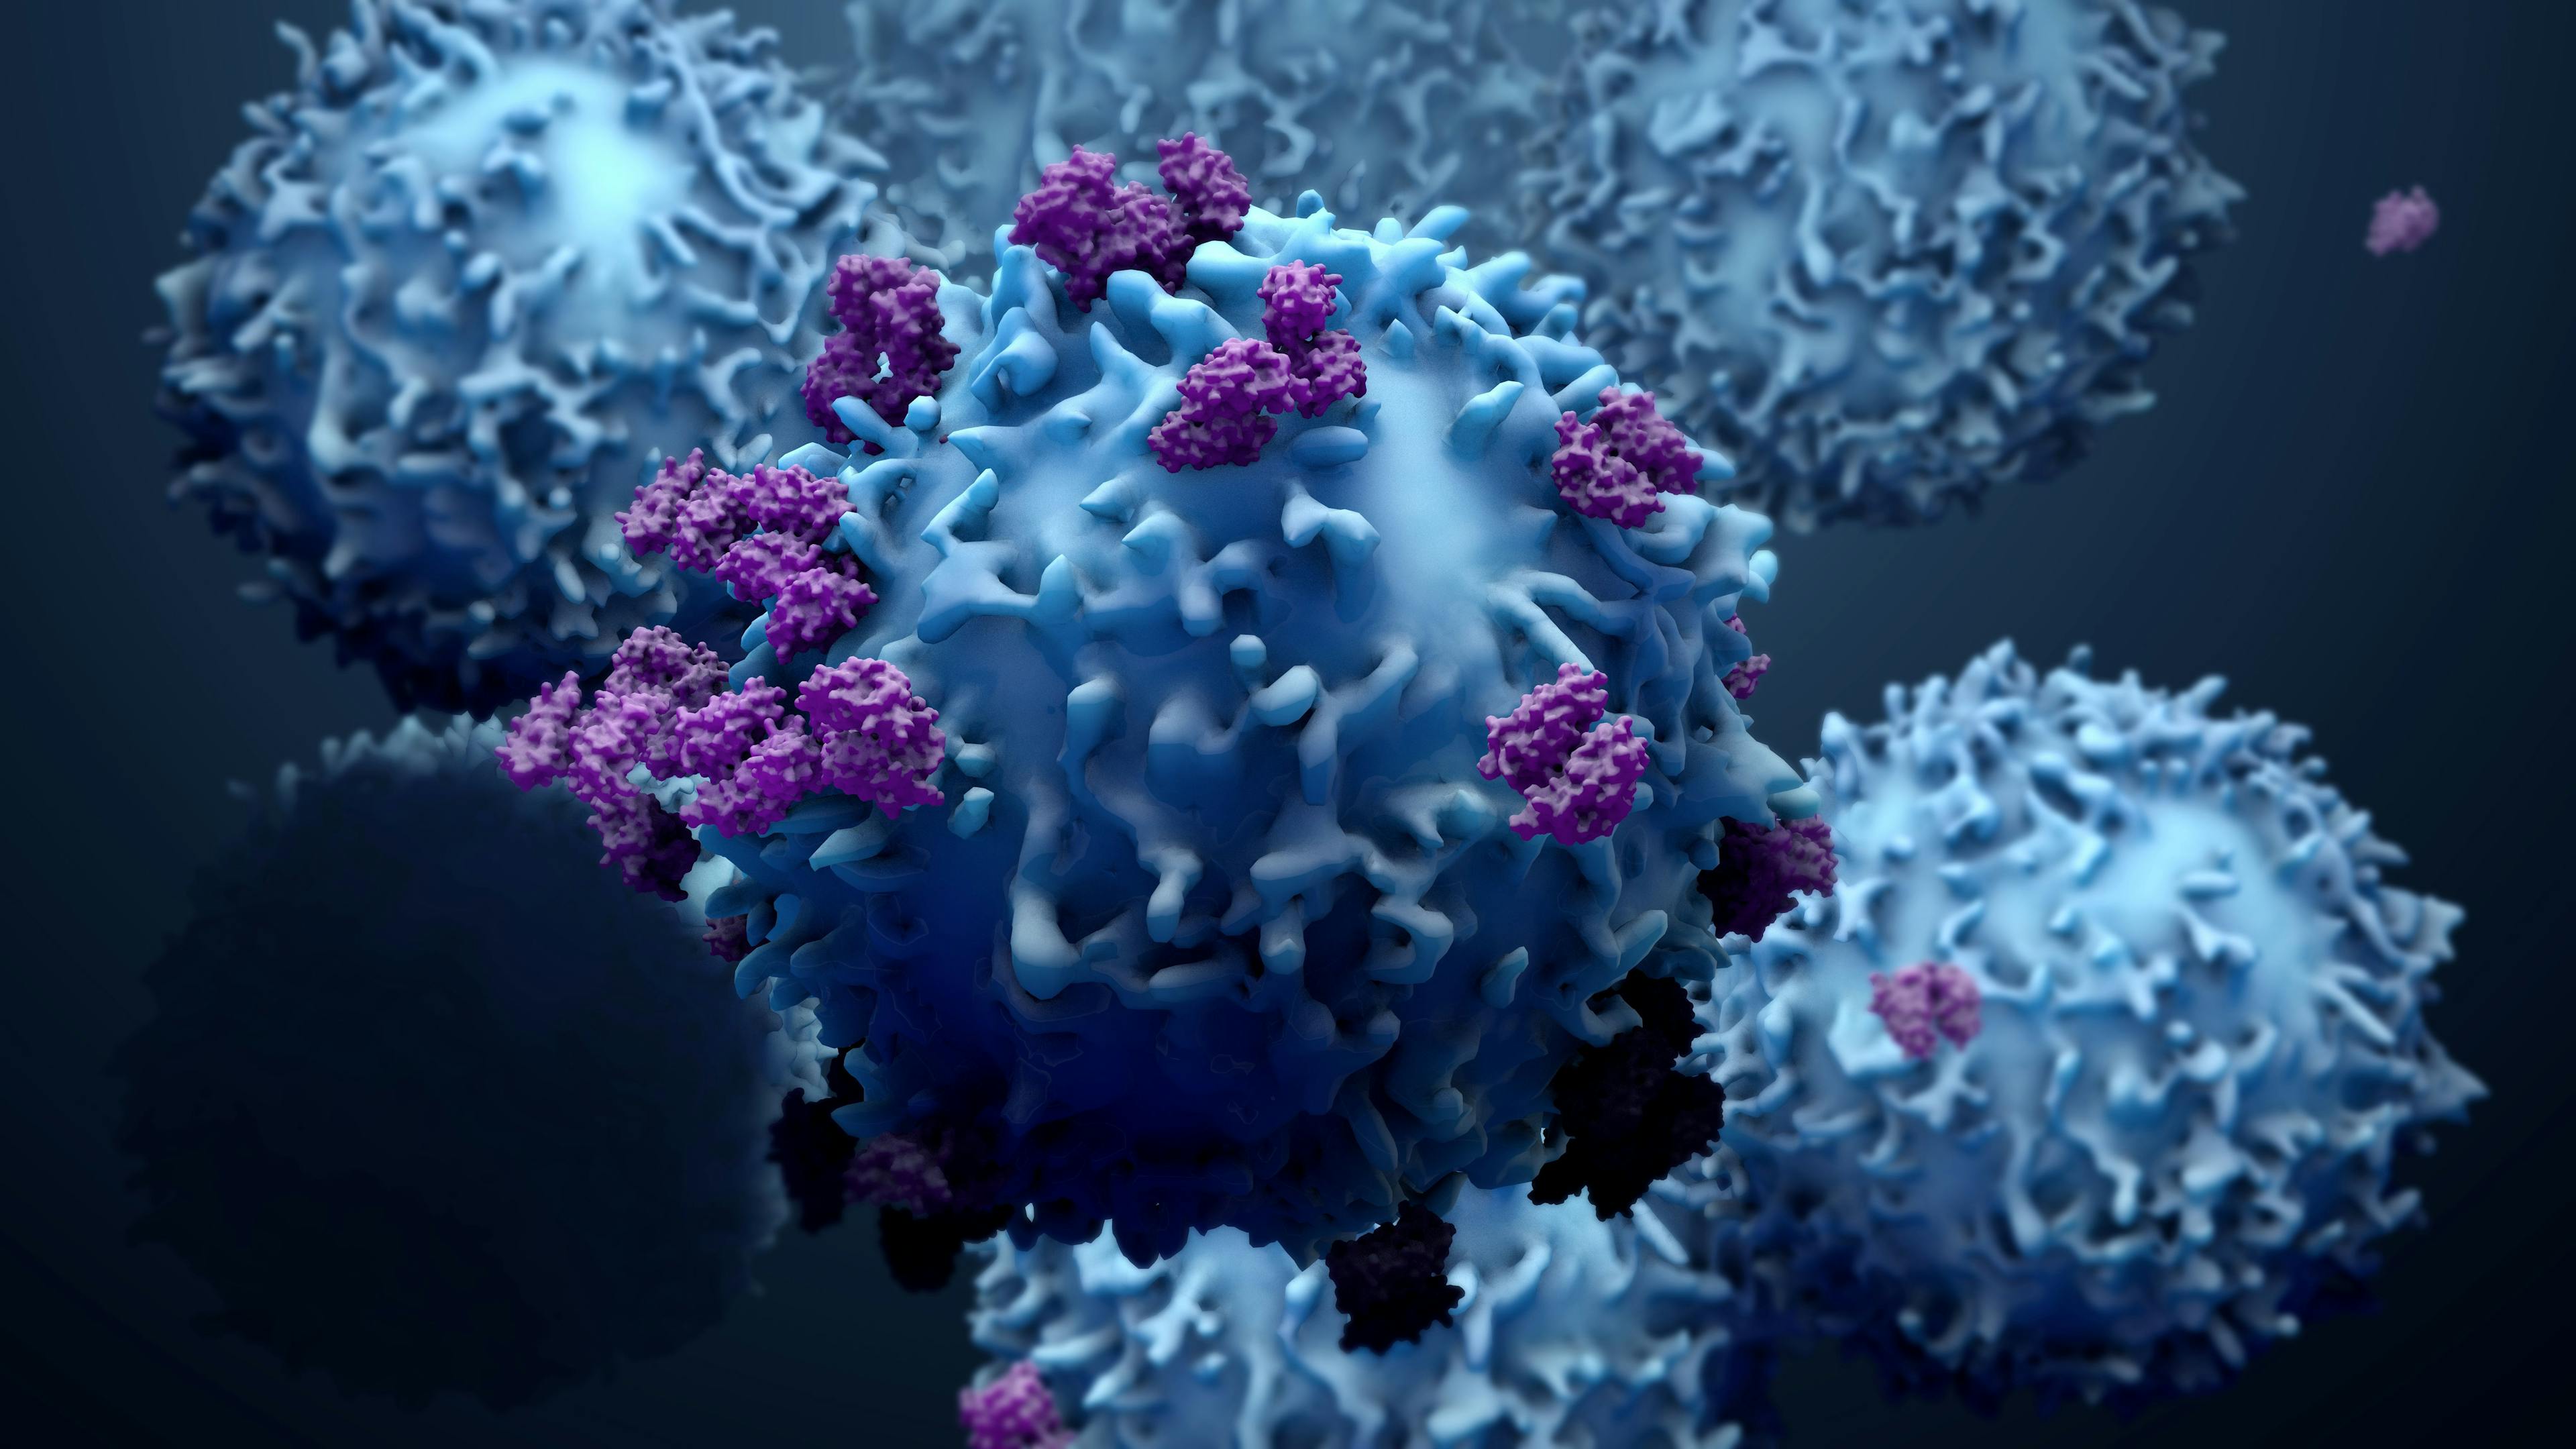 3d illustration proteins with lymphocytes , t cells or cancer cells | Image Credit: Design Cells - www.stock.adobe.com